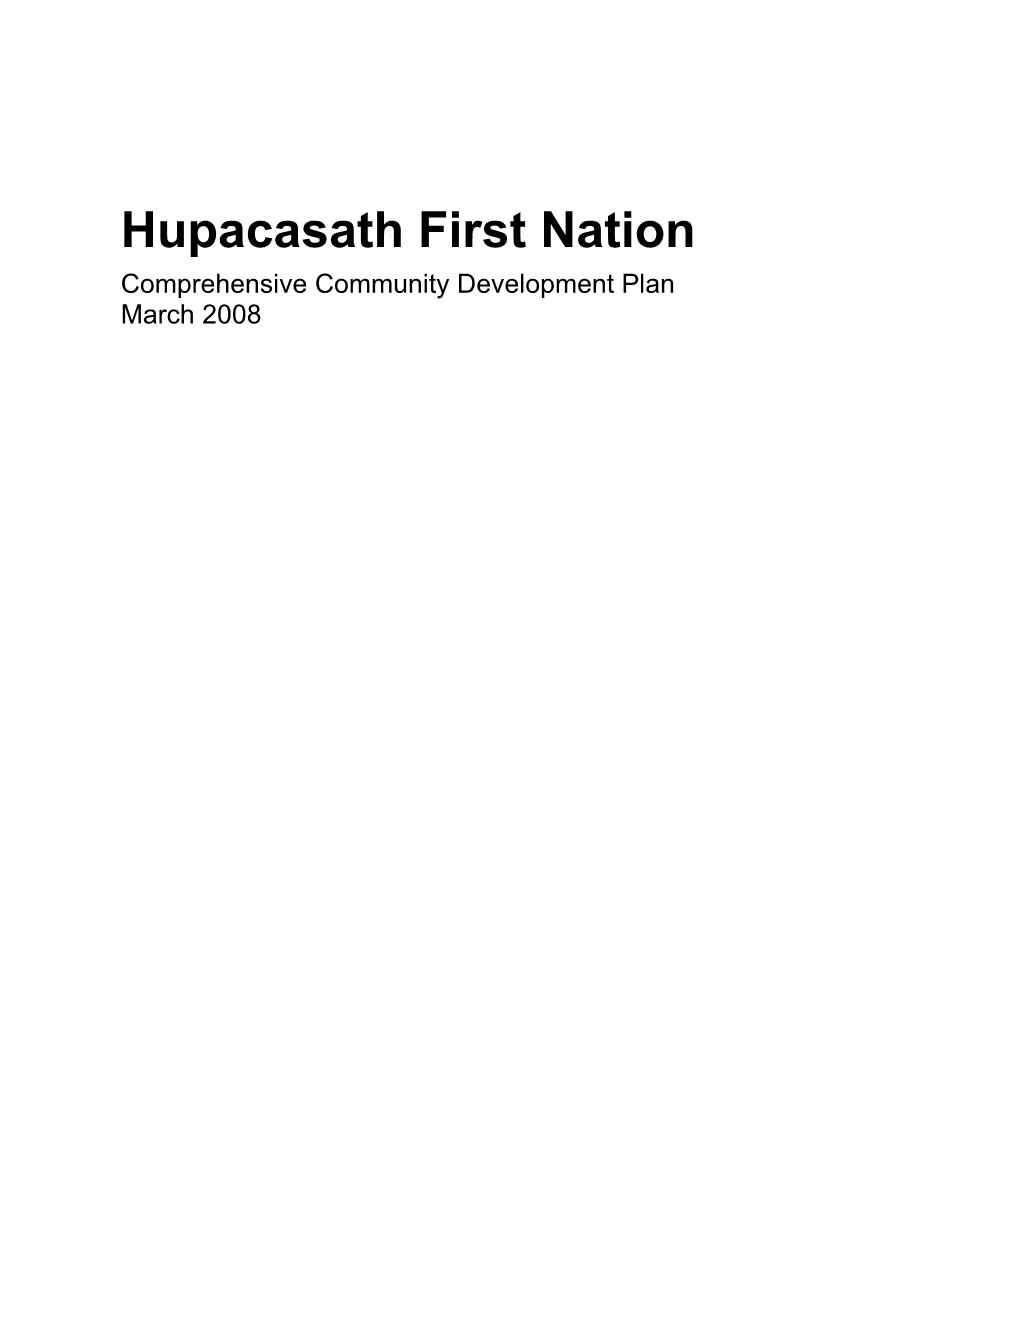 Hupacasath Community Plan 2008 A